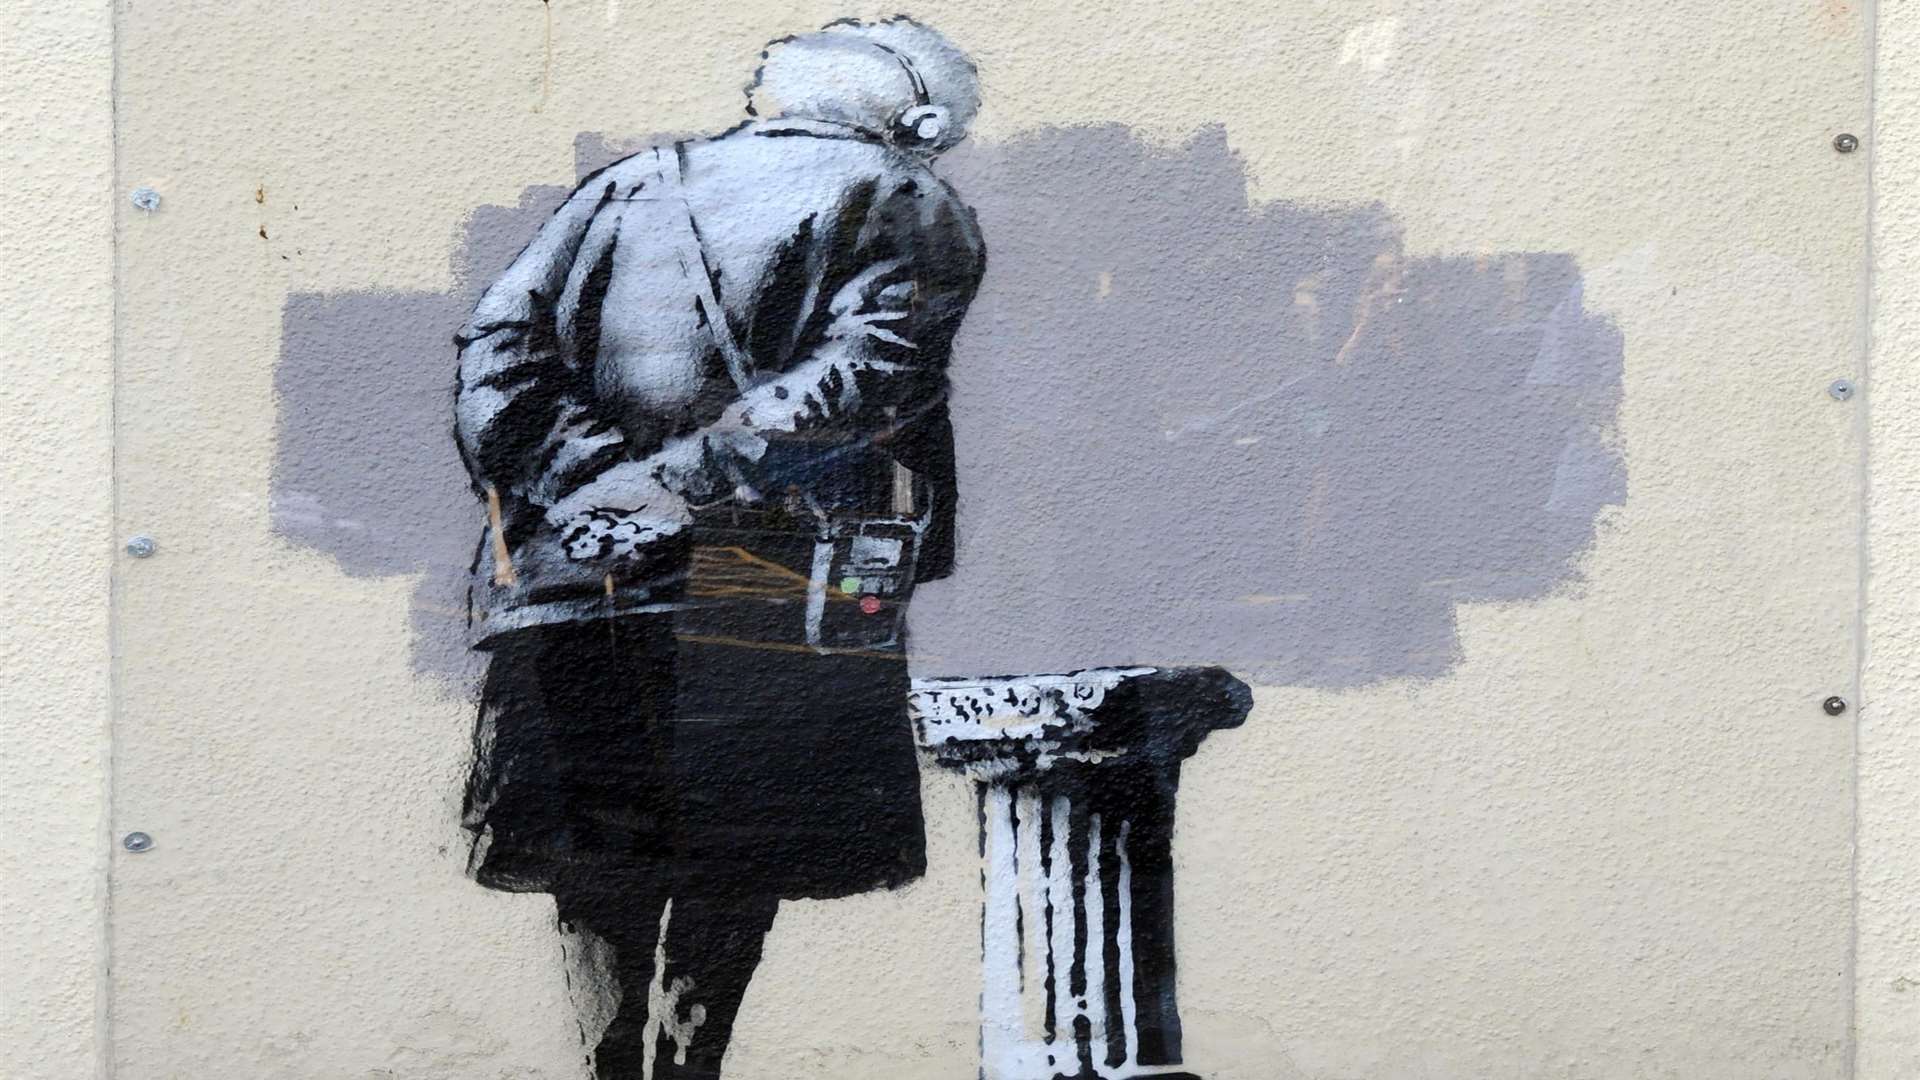 The original Banksy